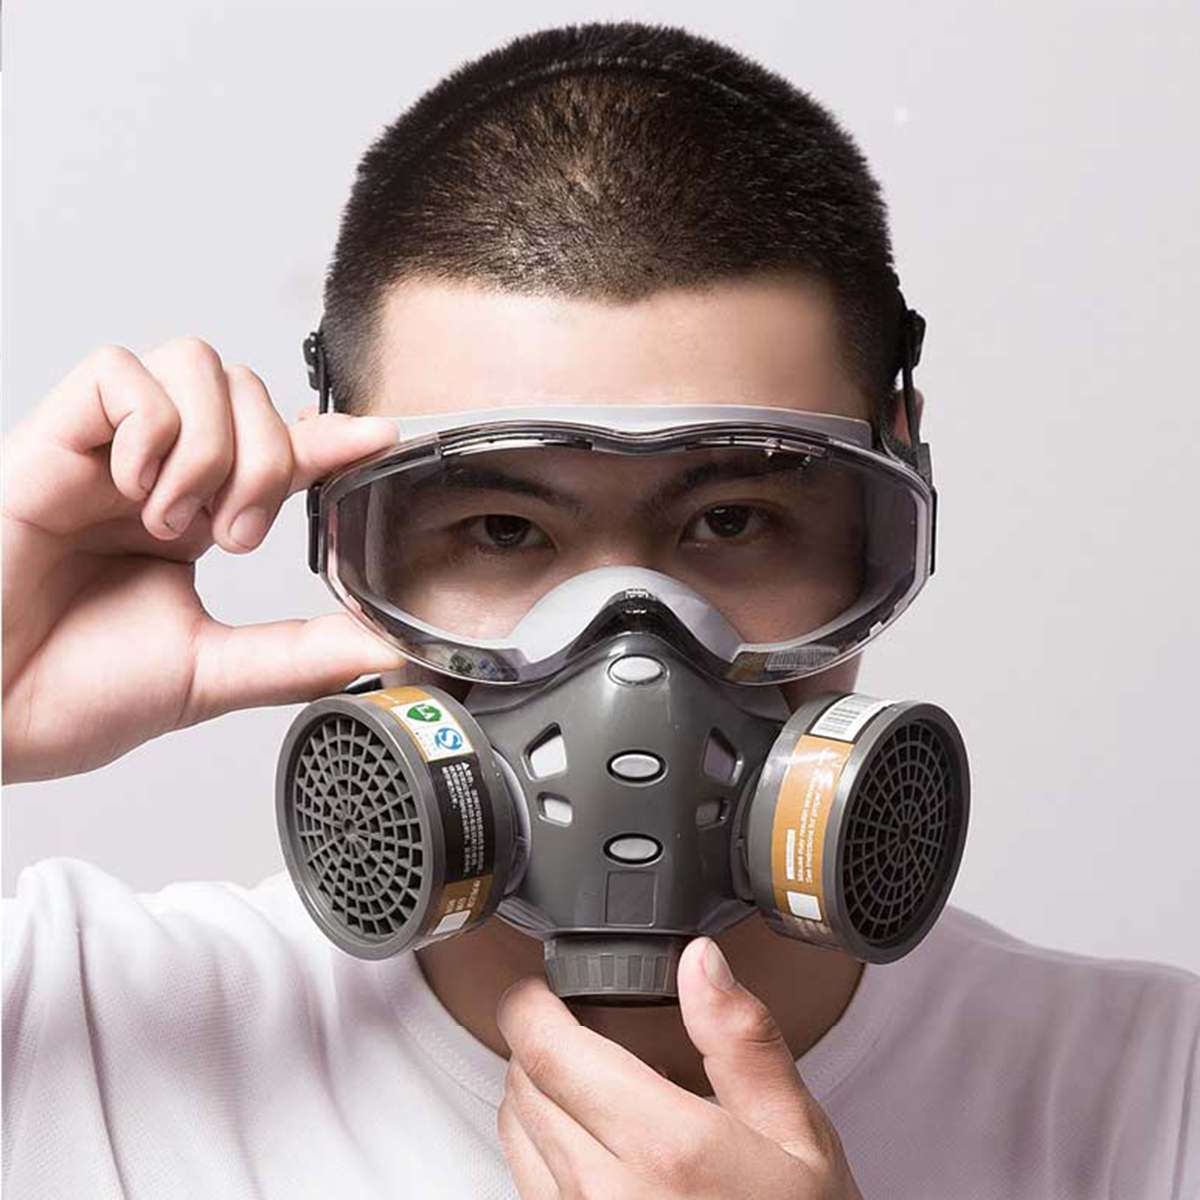 gas mask strain